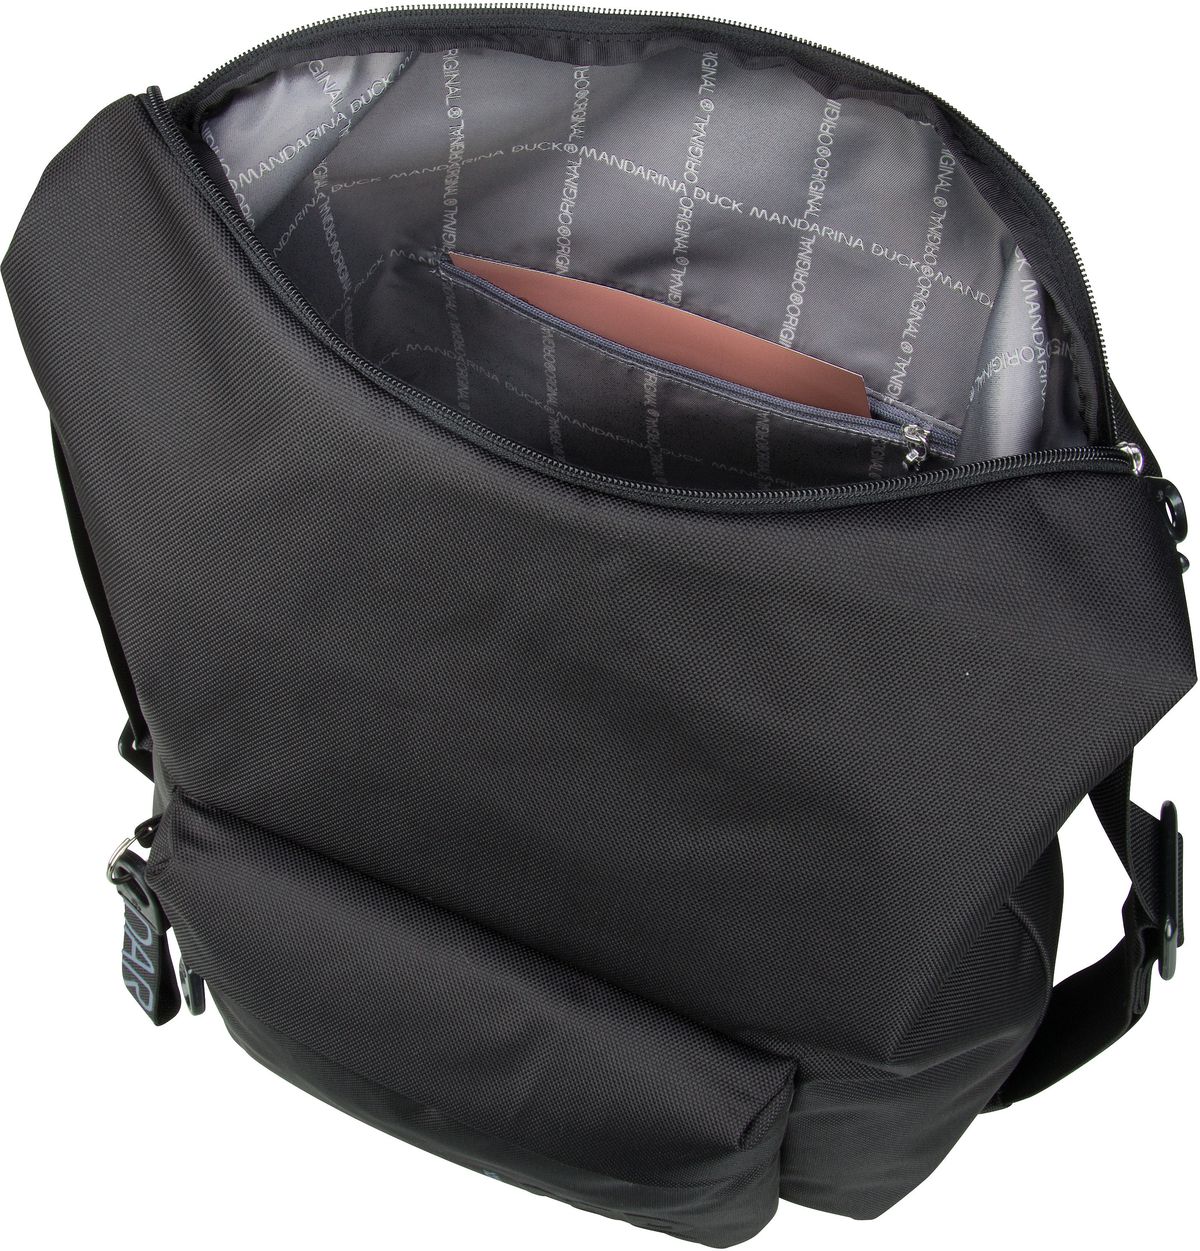 Mandarina Duck MD20 Hobo Backpack QMT09 - Black